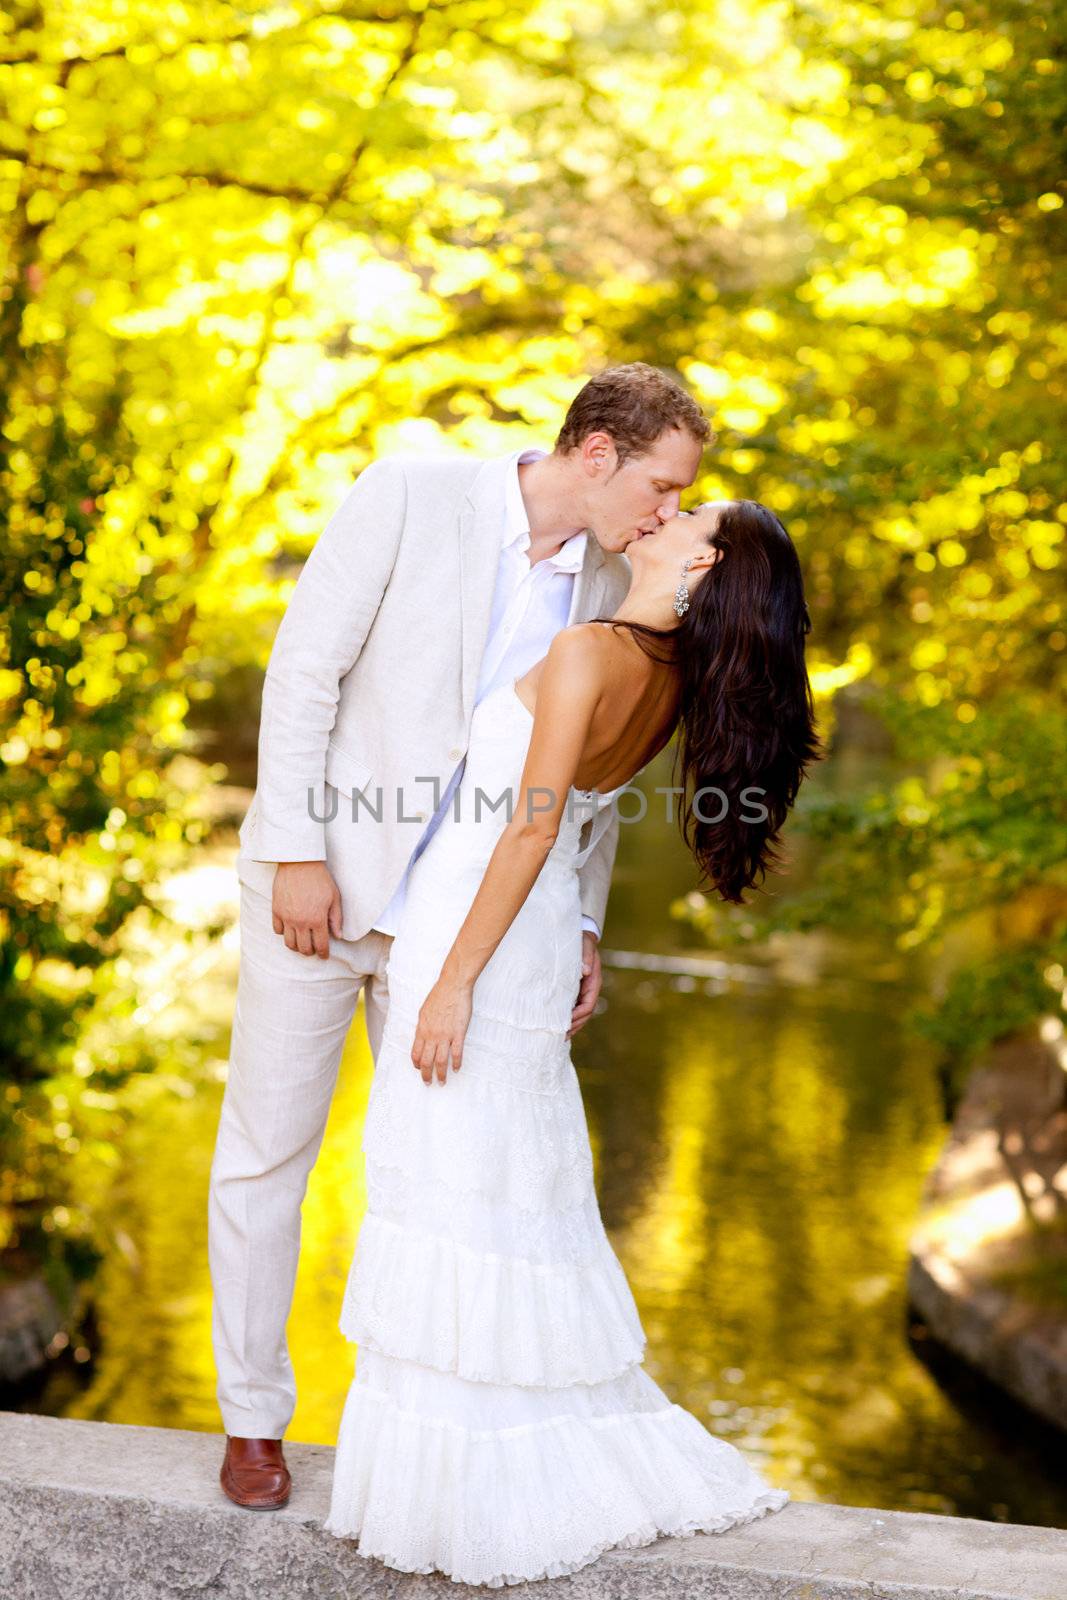 couple kissing in honeymoon outdoor park by lunamarina